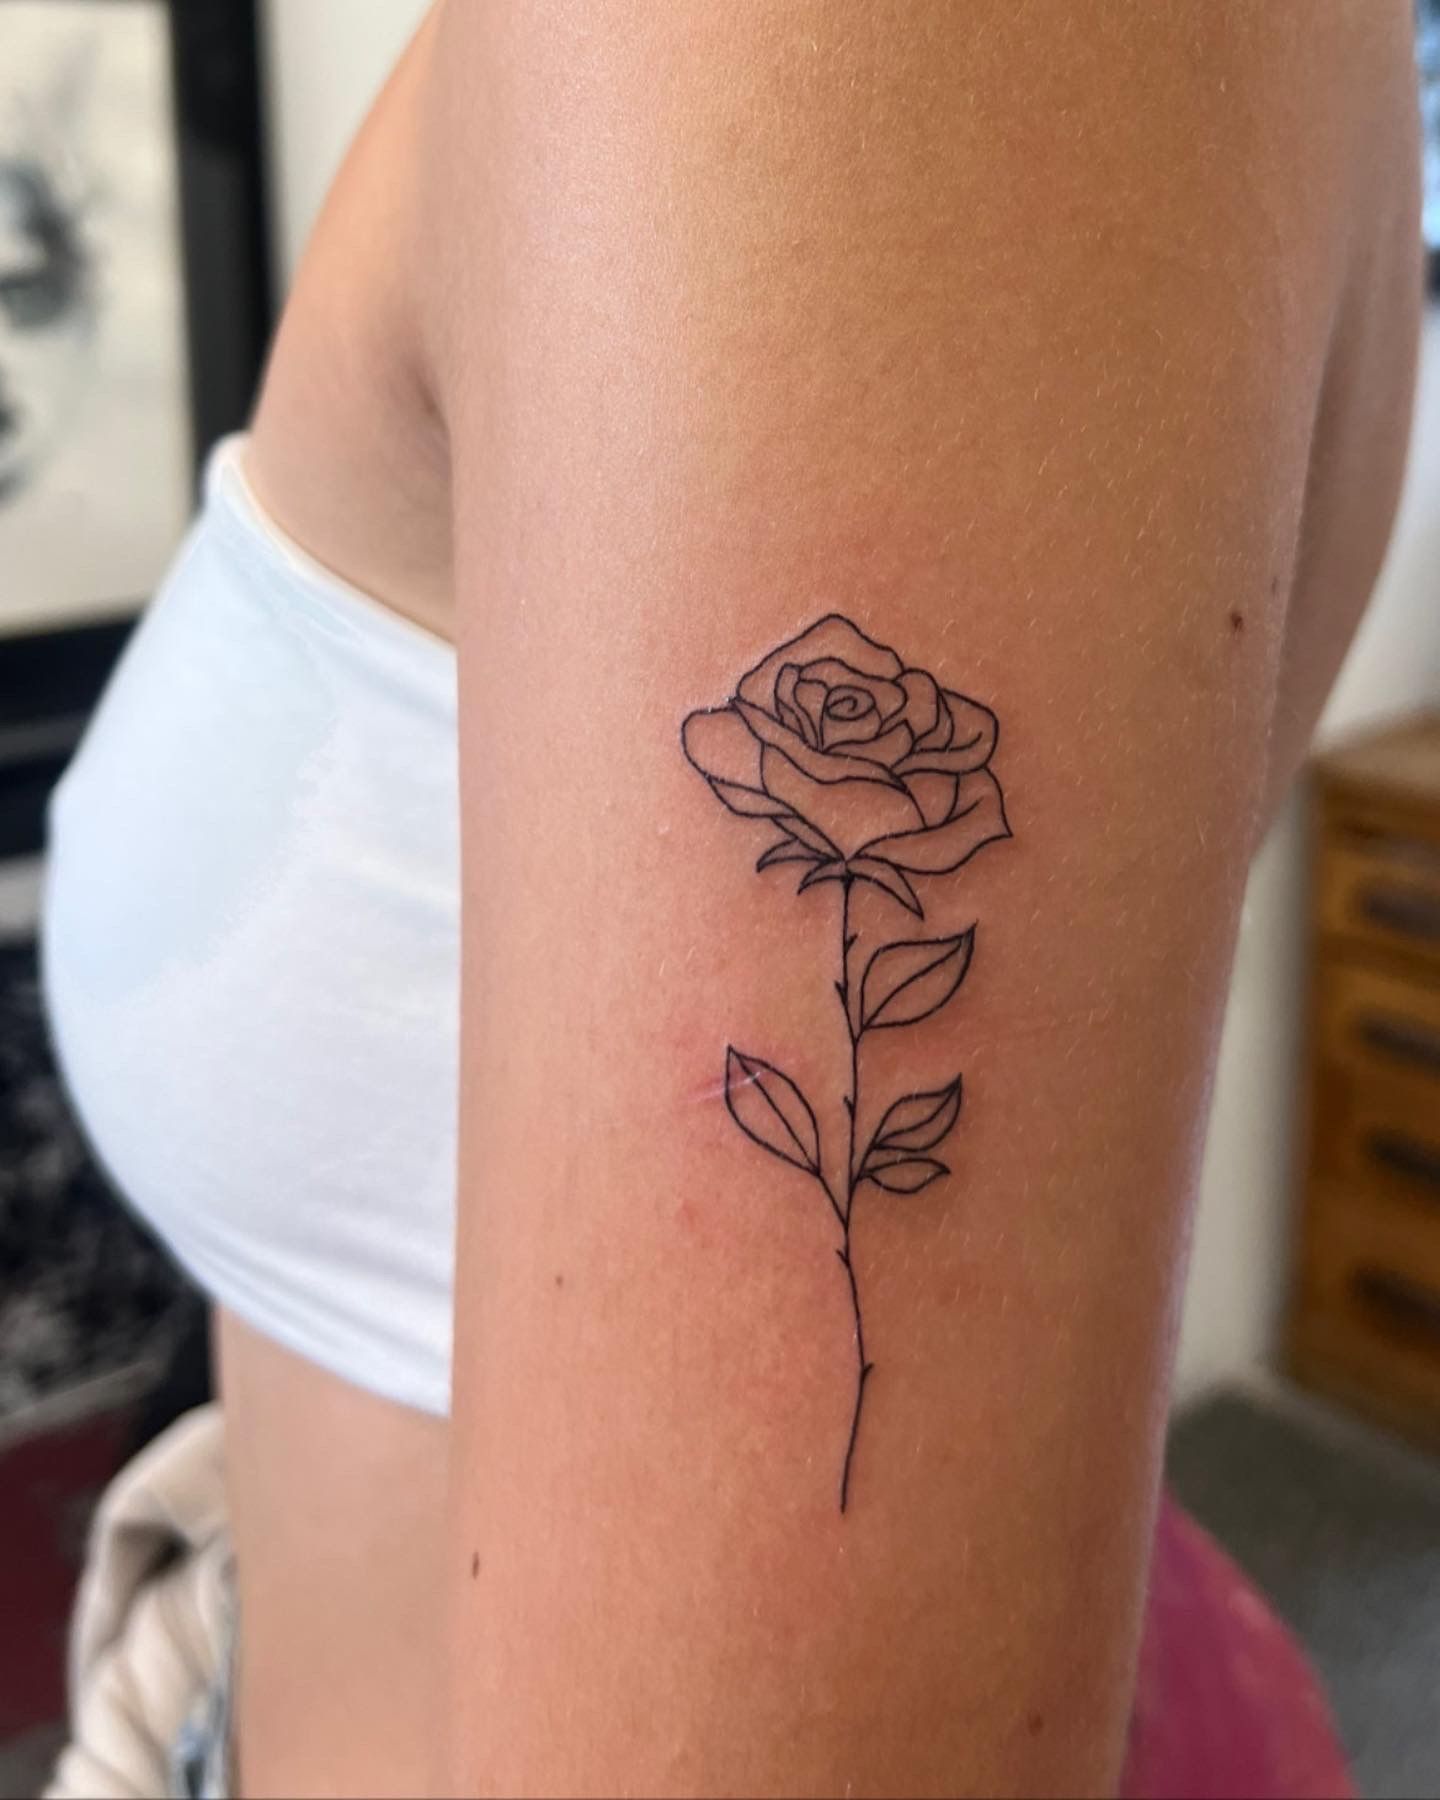 Fine line rose tattoo on the inner forearm